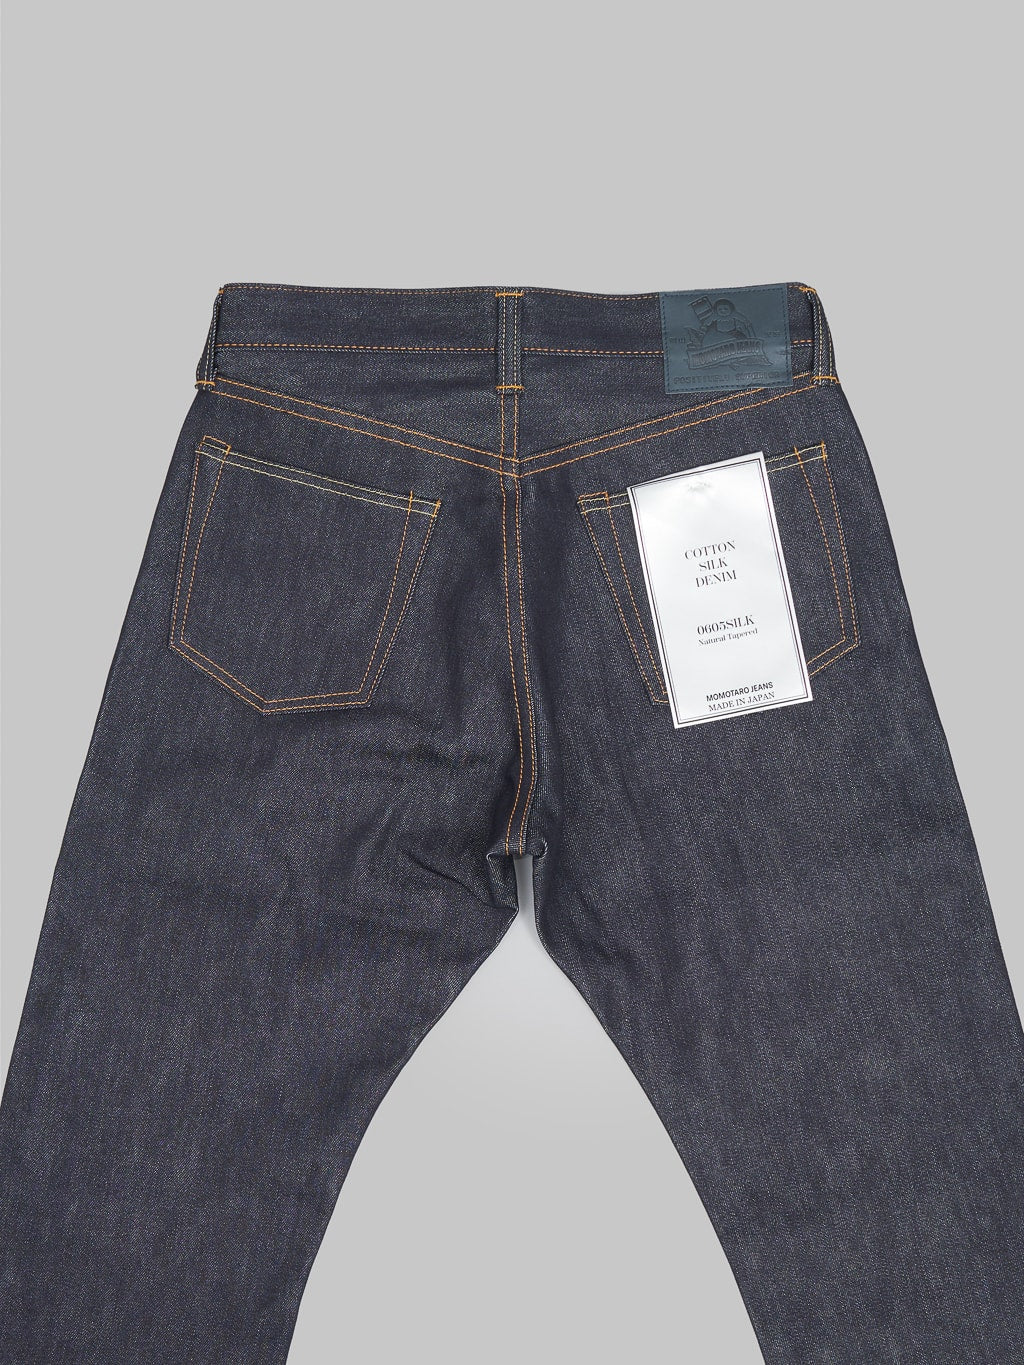 Momotaro 0605SILK Denim Natural Tapered Jeans back pockets